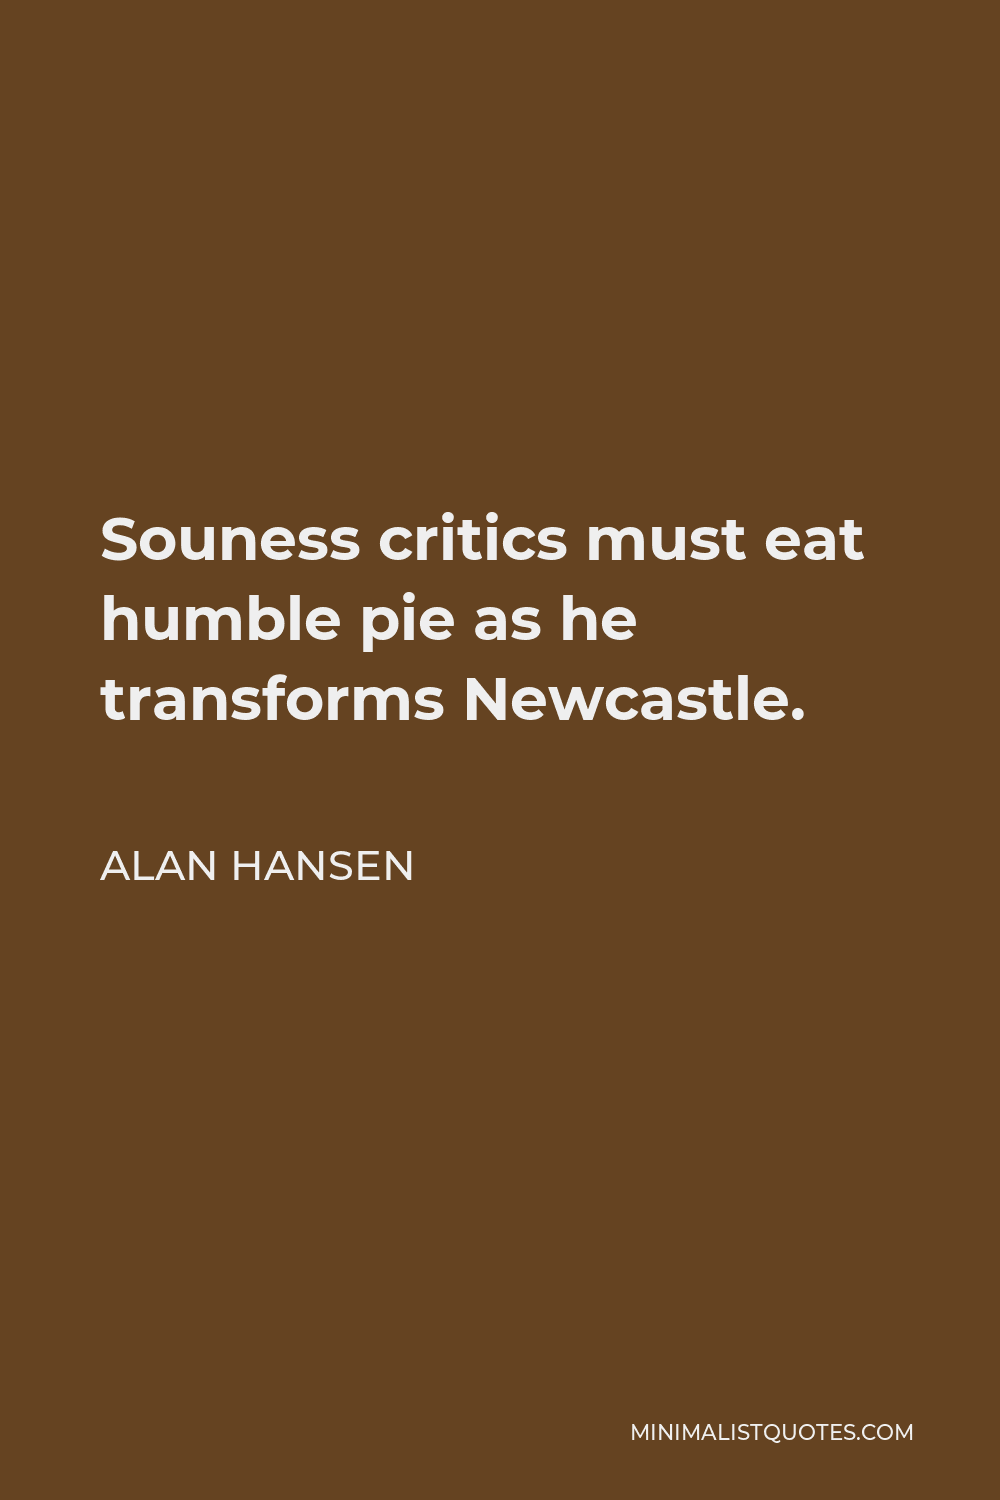 Alan Hansen Quote - Souness critics must eat humble pie as he transforms Newcastle.